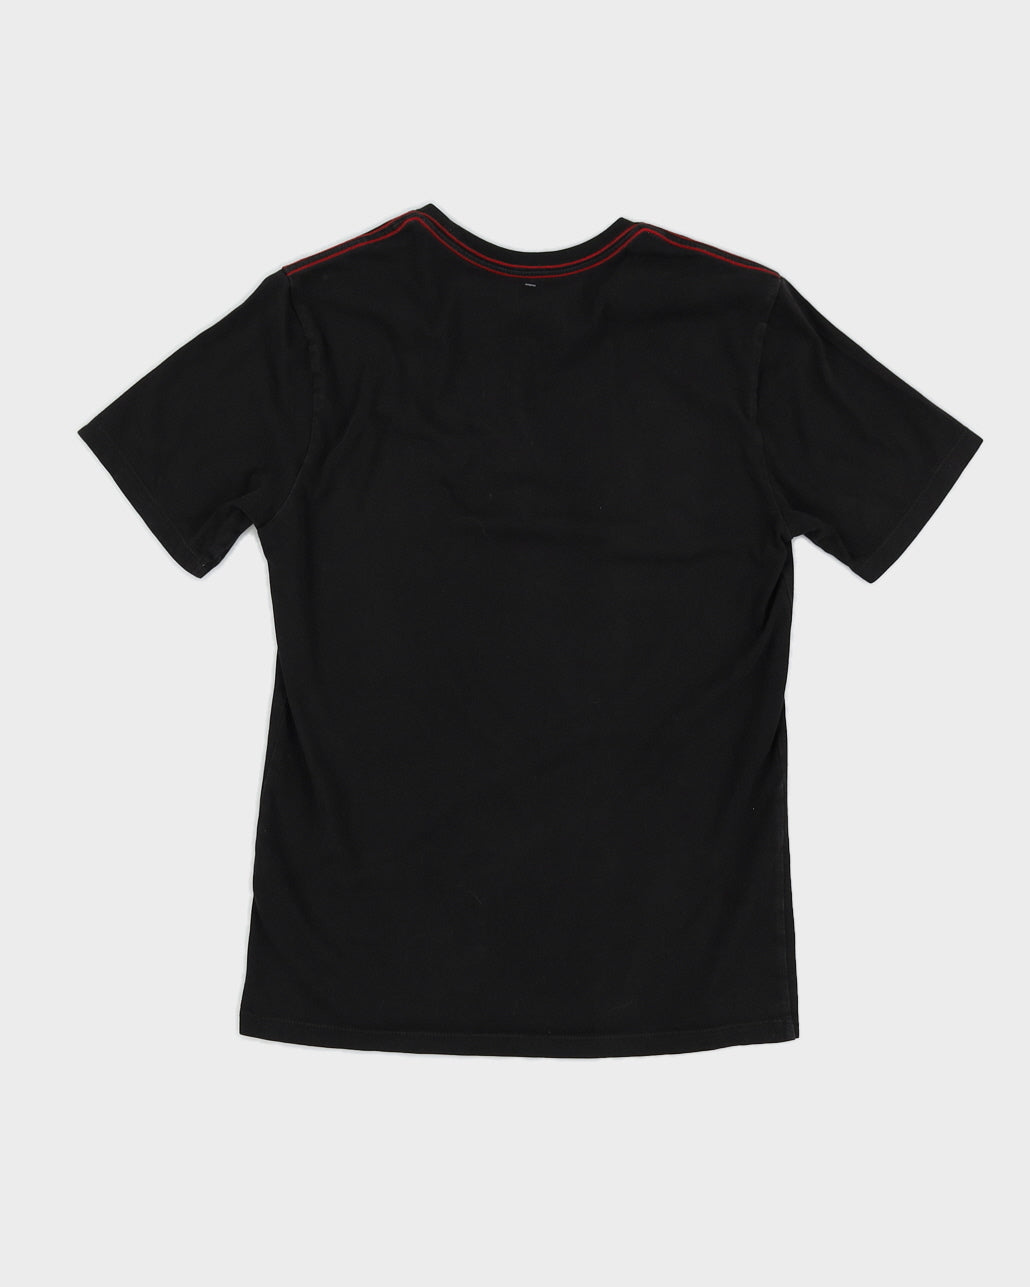 00s True Religion Black Printed T-Shirt - S